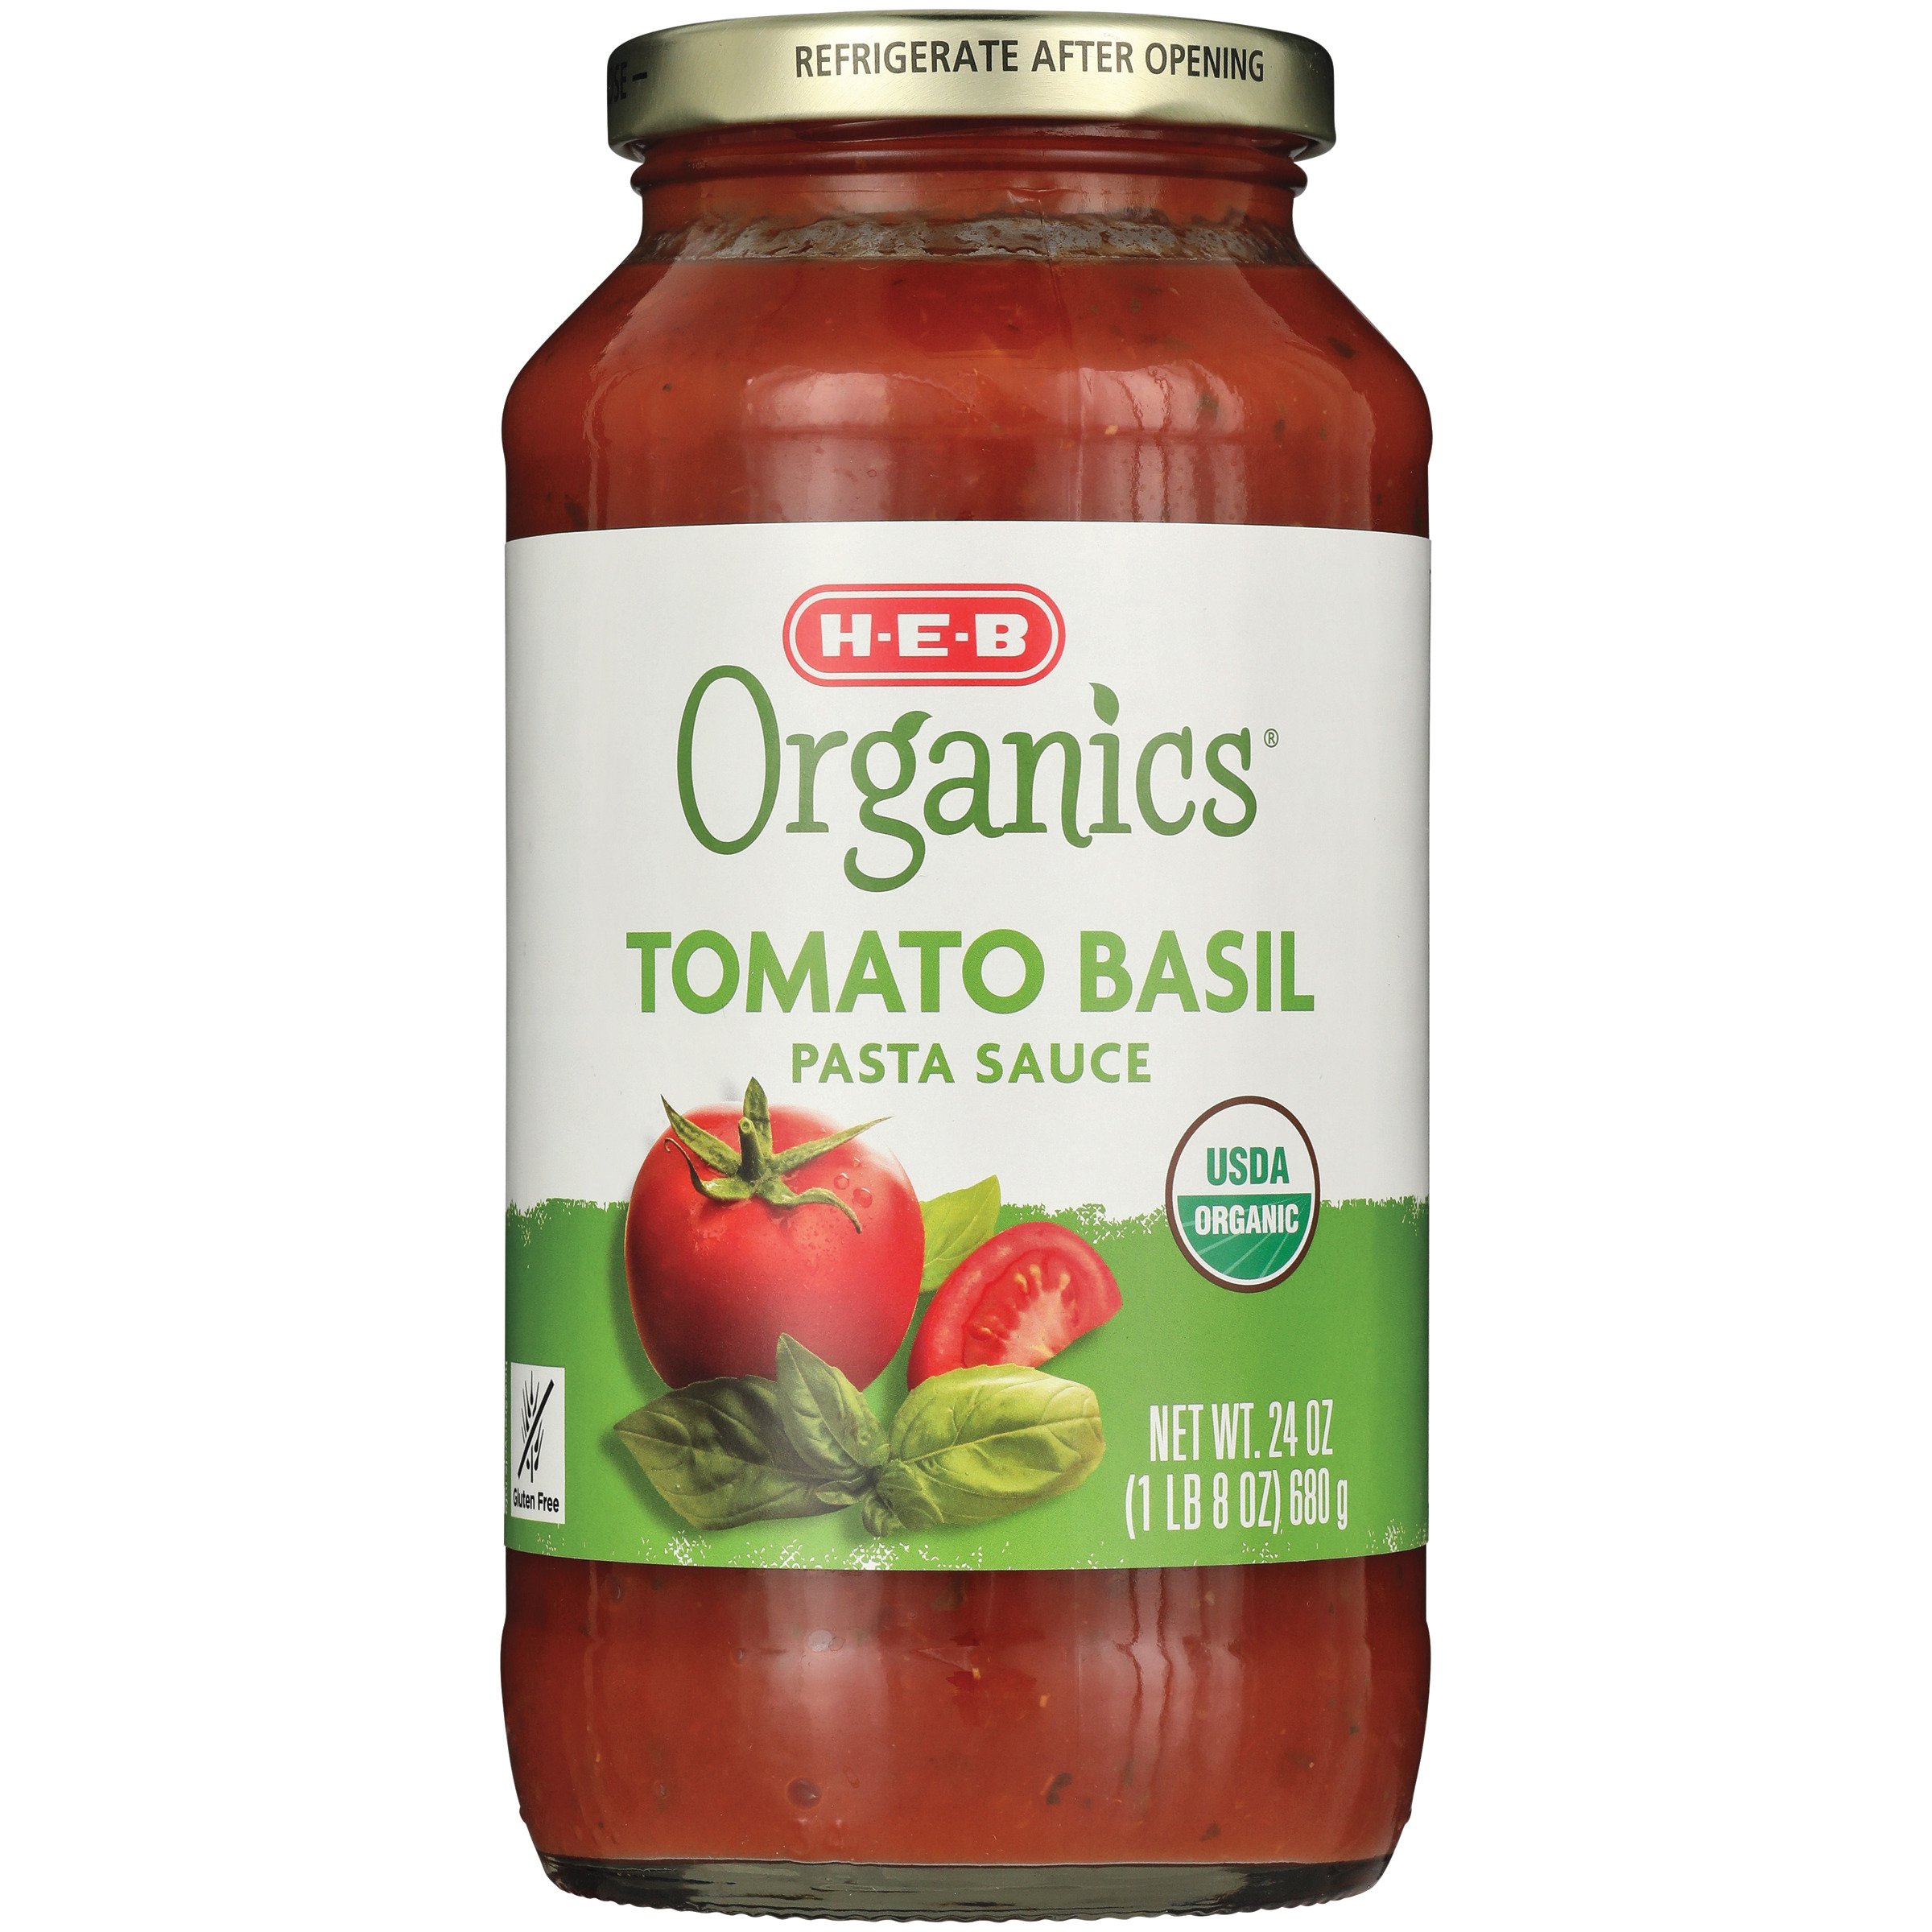 H-E-B Organics Tomato Basil Pasta Sauce - Shop Pasta Sauces at H-E-B